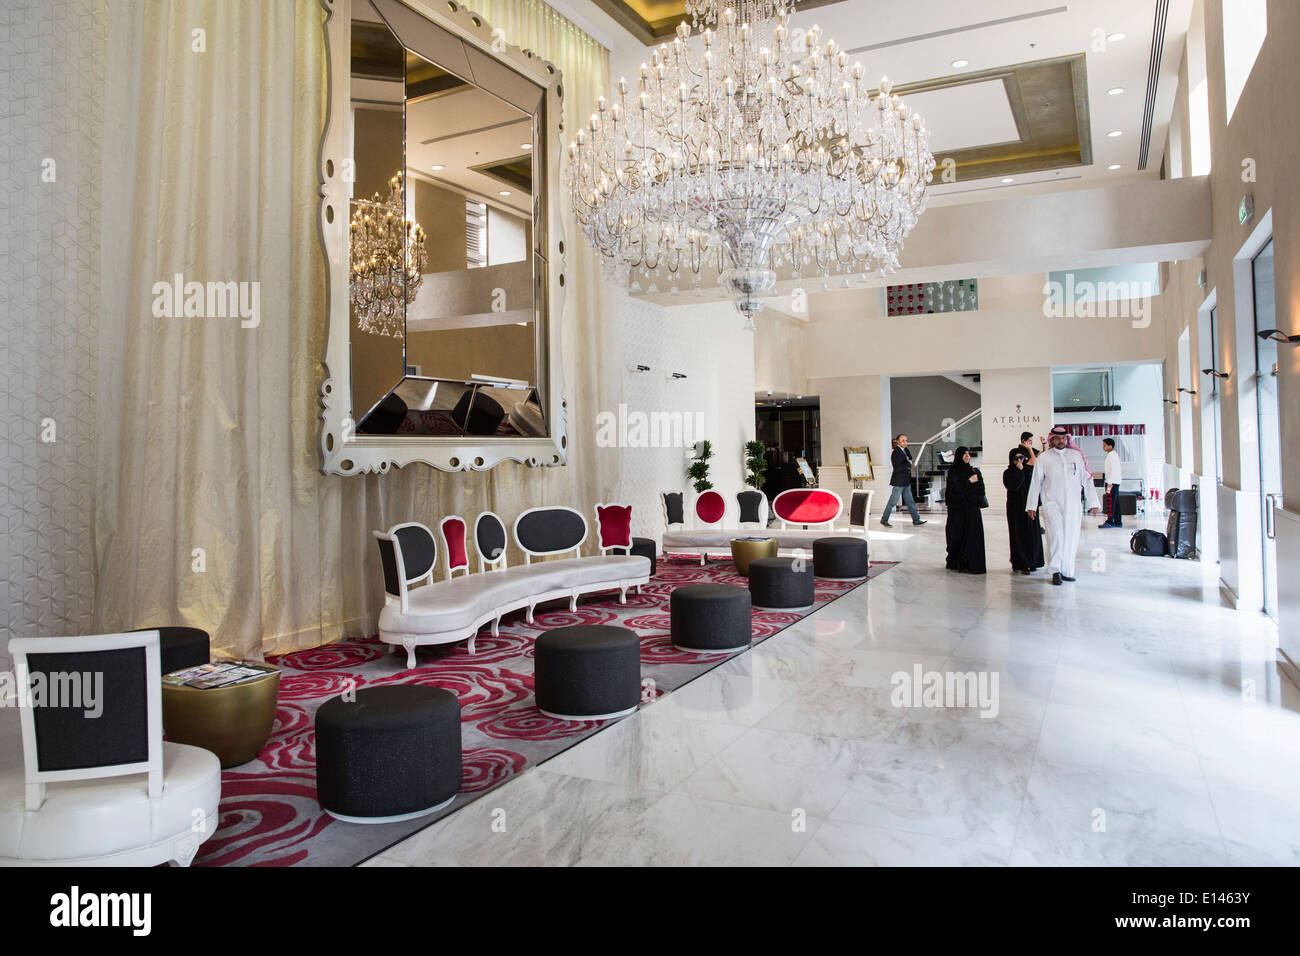 United Arab Emirates, Dubai, Lobby of Atrium Hotel Stock Photo